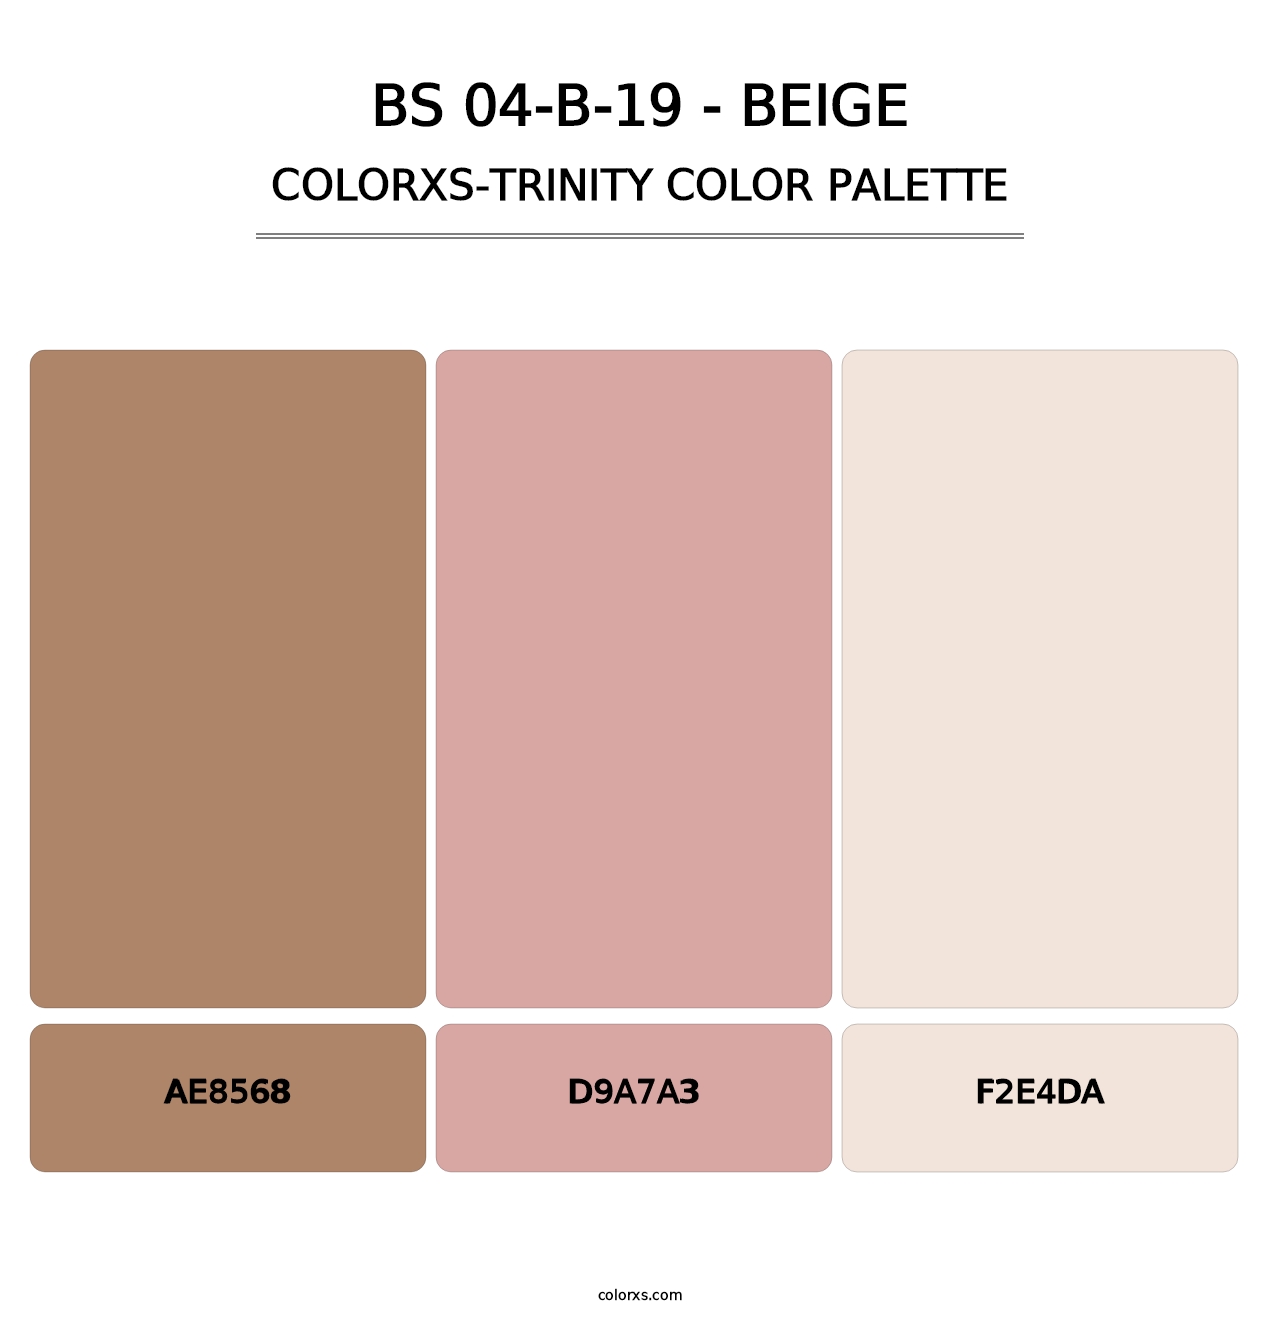 BS 04-B-19 - Beige - Colorxs Trinity Palette